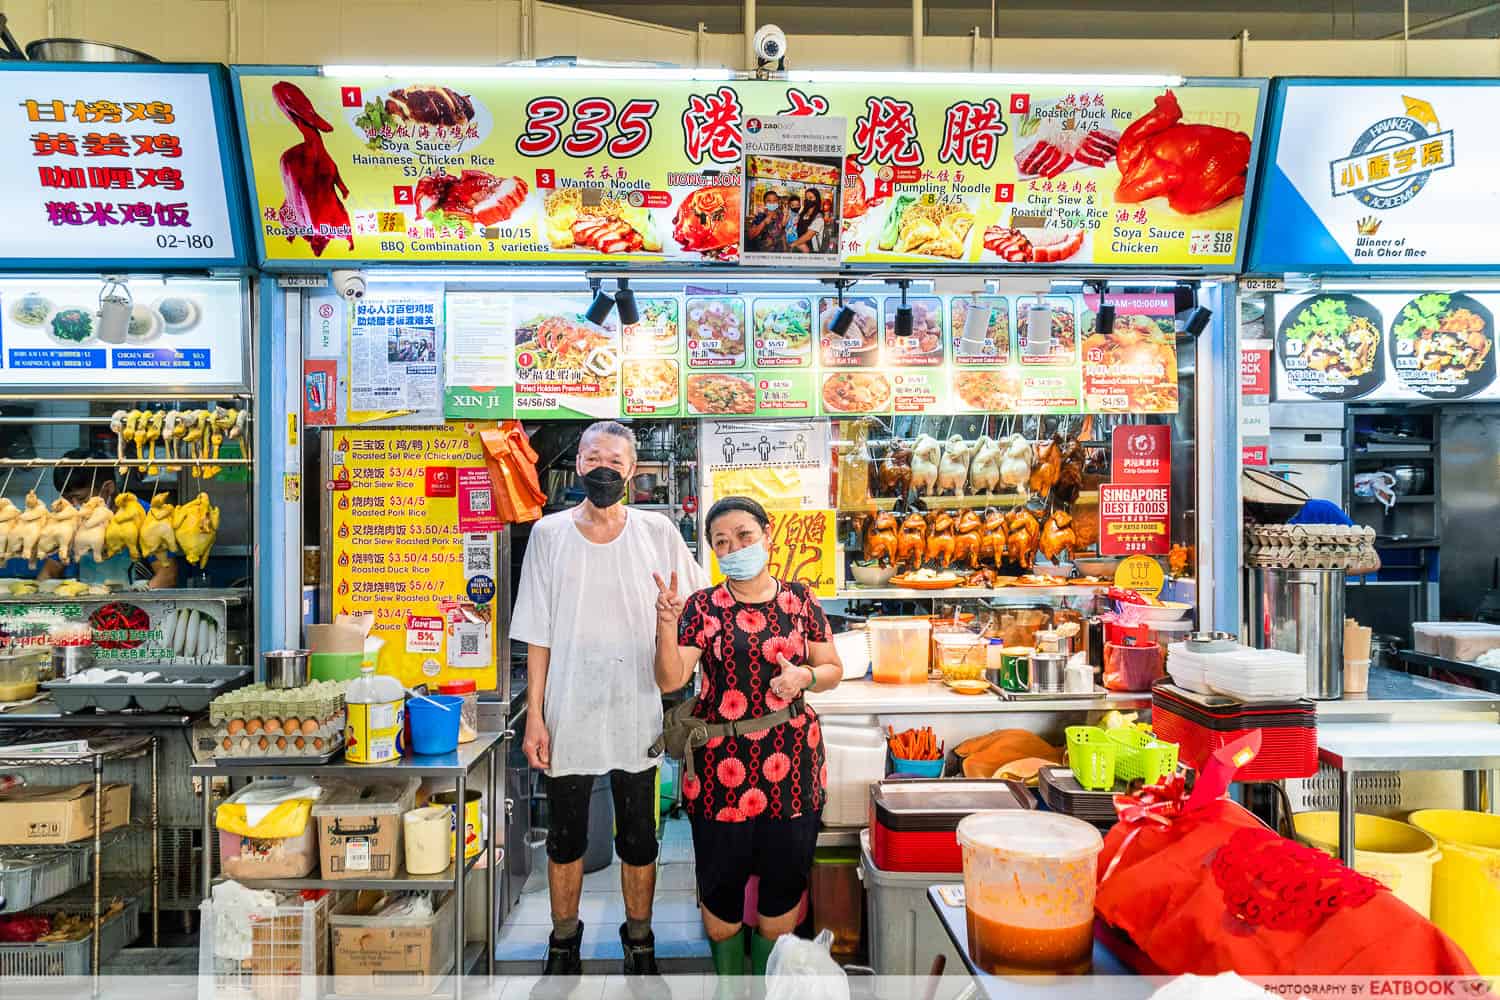 335 Hong Kong Roast Meat Storefront